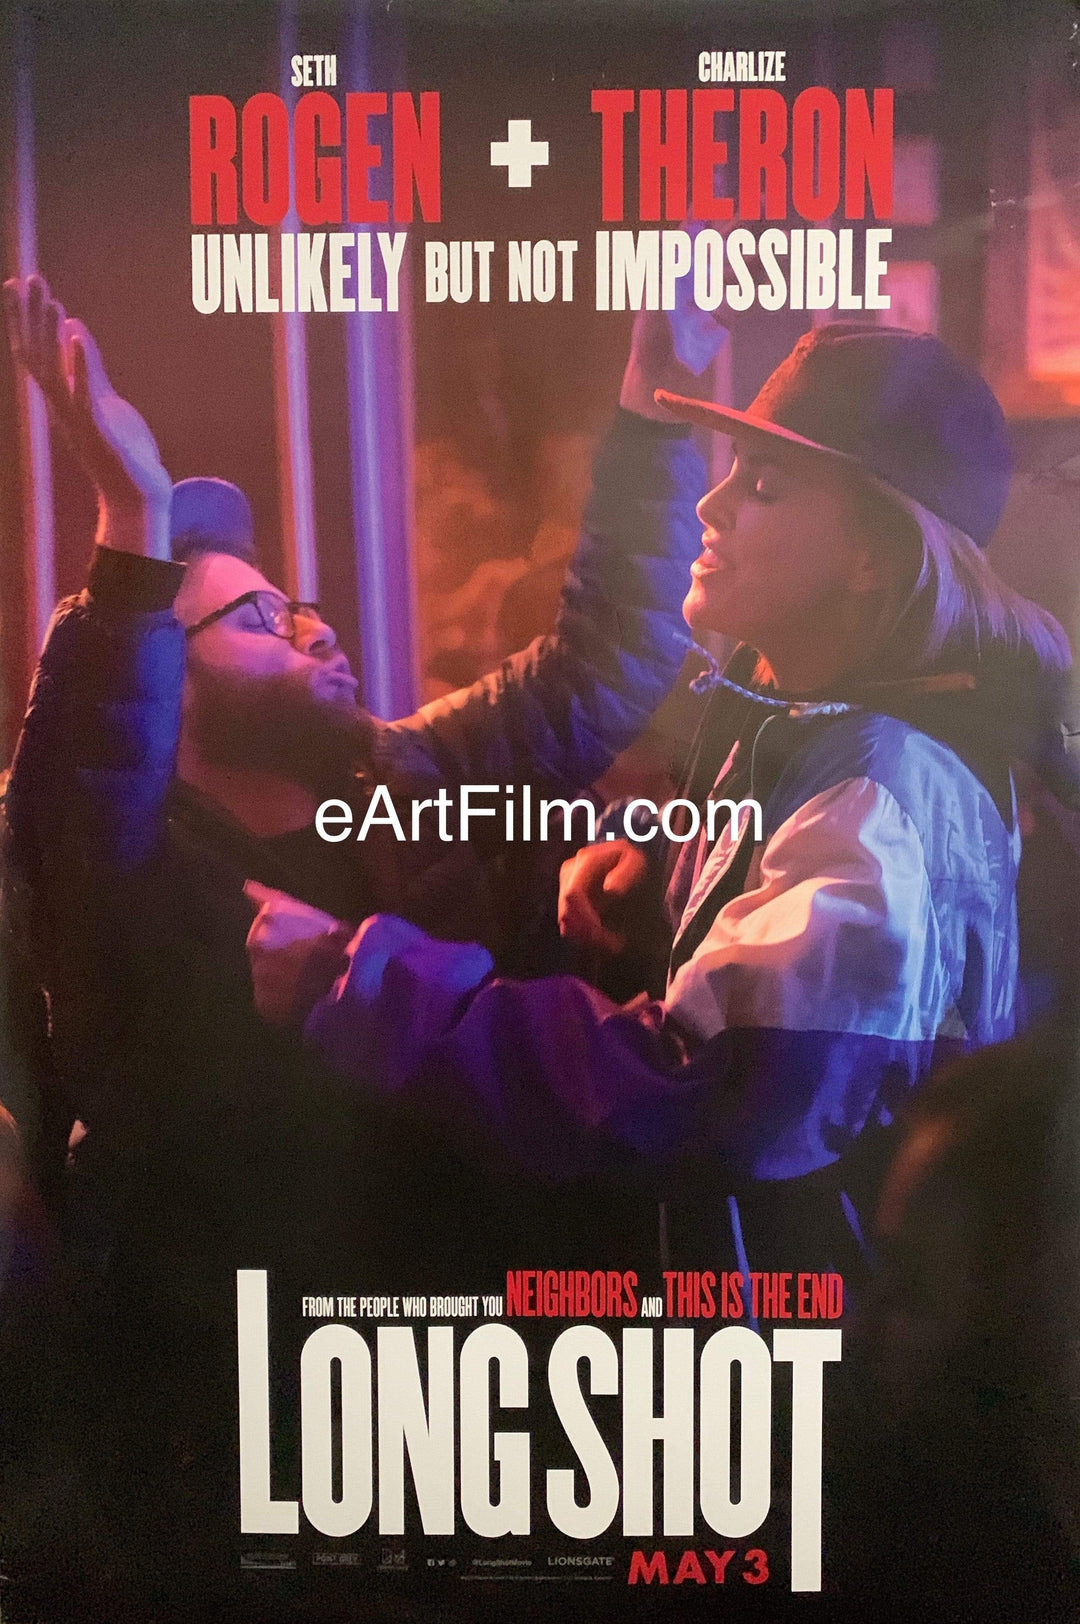 eArtFilm.com U.S One Sheet (27"x40") Double Sided Long Shot original movie poster 2019 27x40 Style B Charlize Theron Seth Rogen